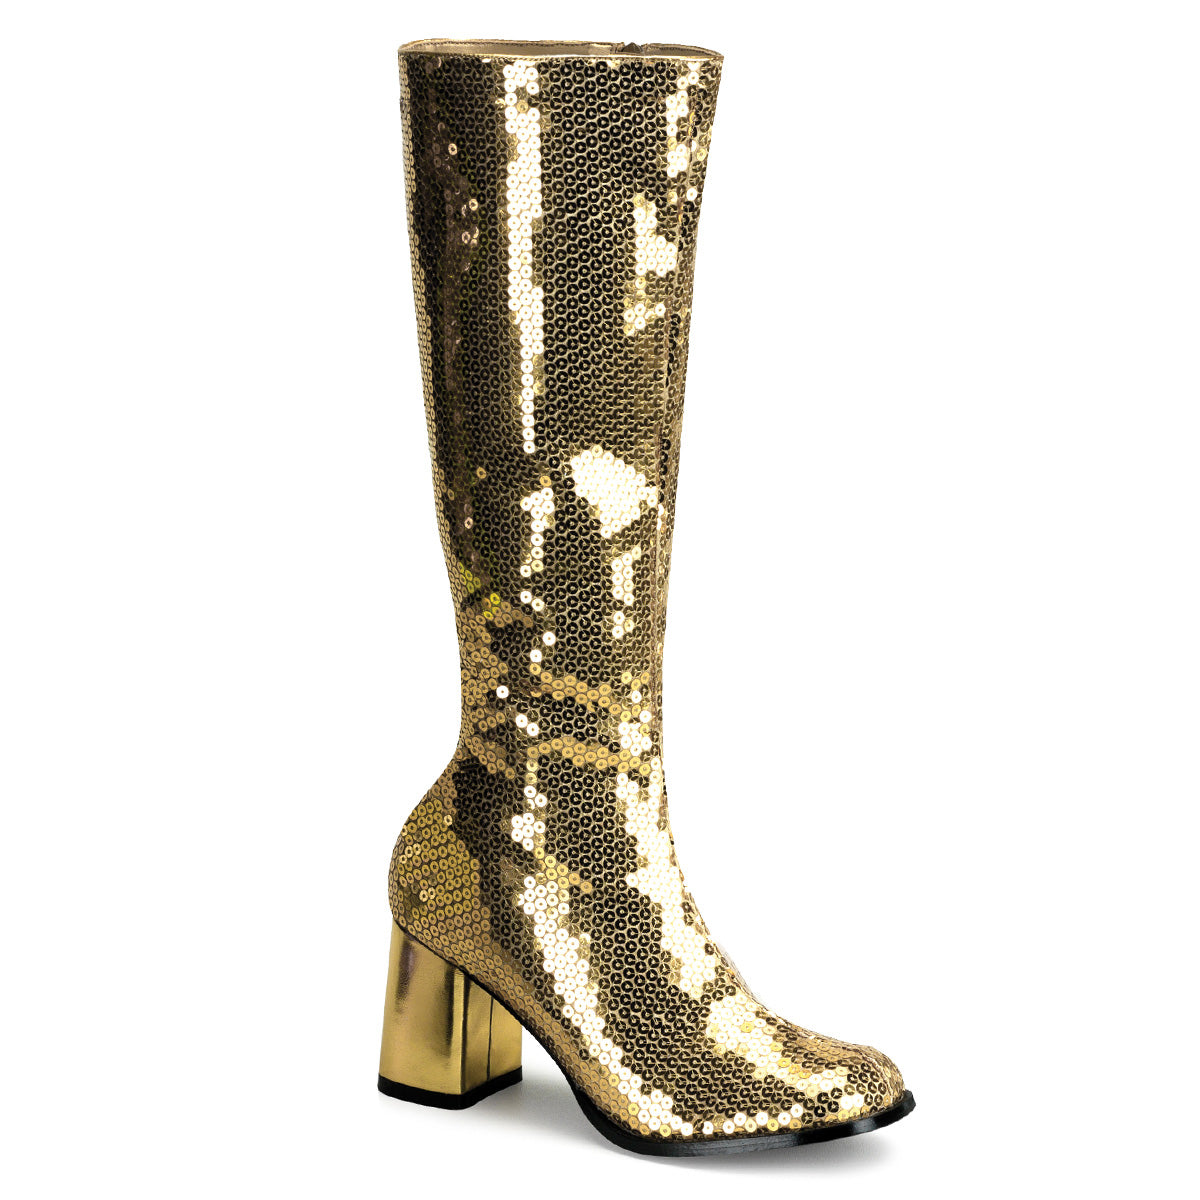 SPECTACUL-300SQ Bordello Burlesque 3" Heel Gold Sequin Boots